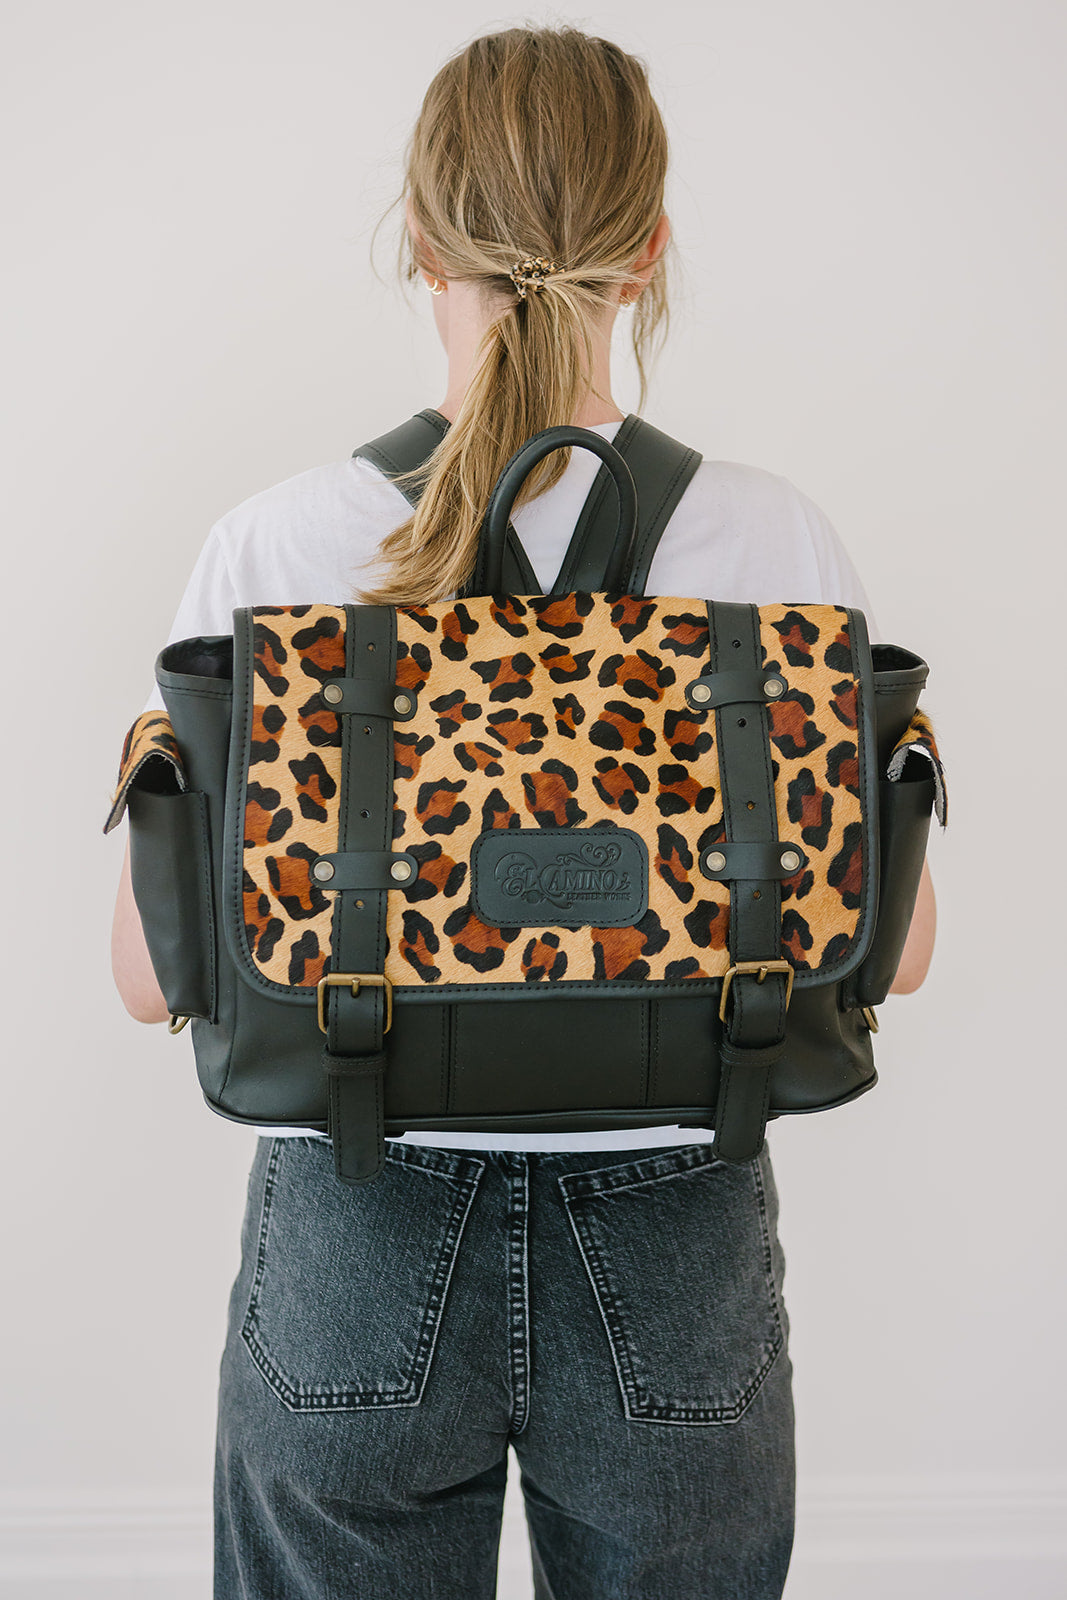 Viaje Backpack Black Leather Leopard - Limited Edition